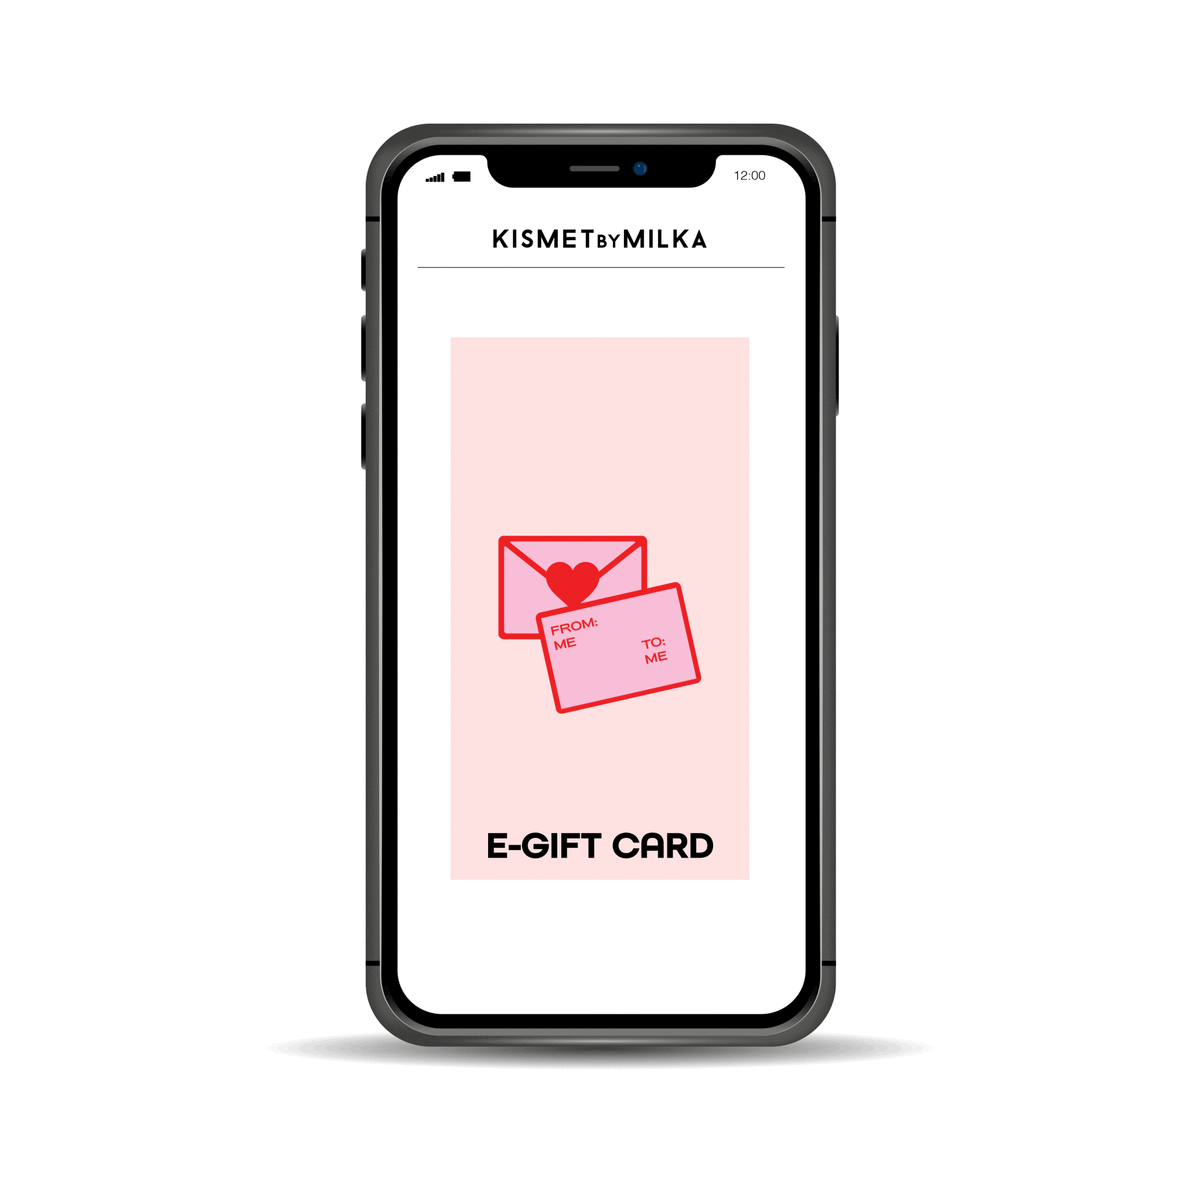 Gift Card - Kısmet by Milka Türkiye